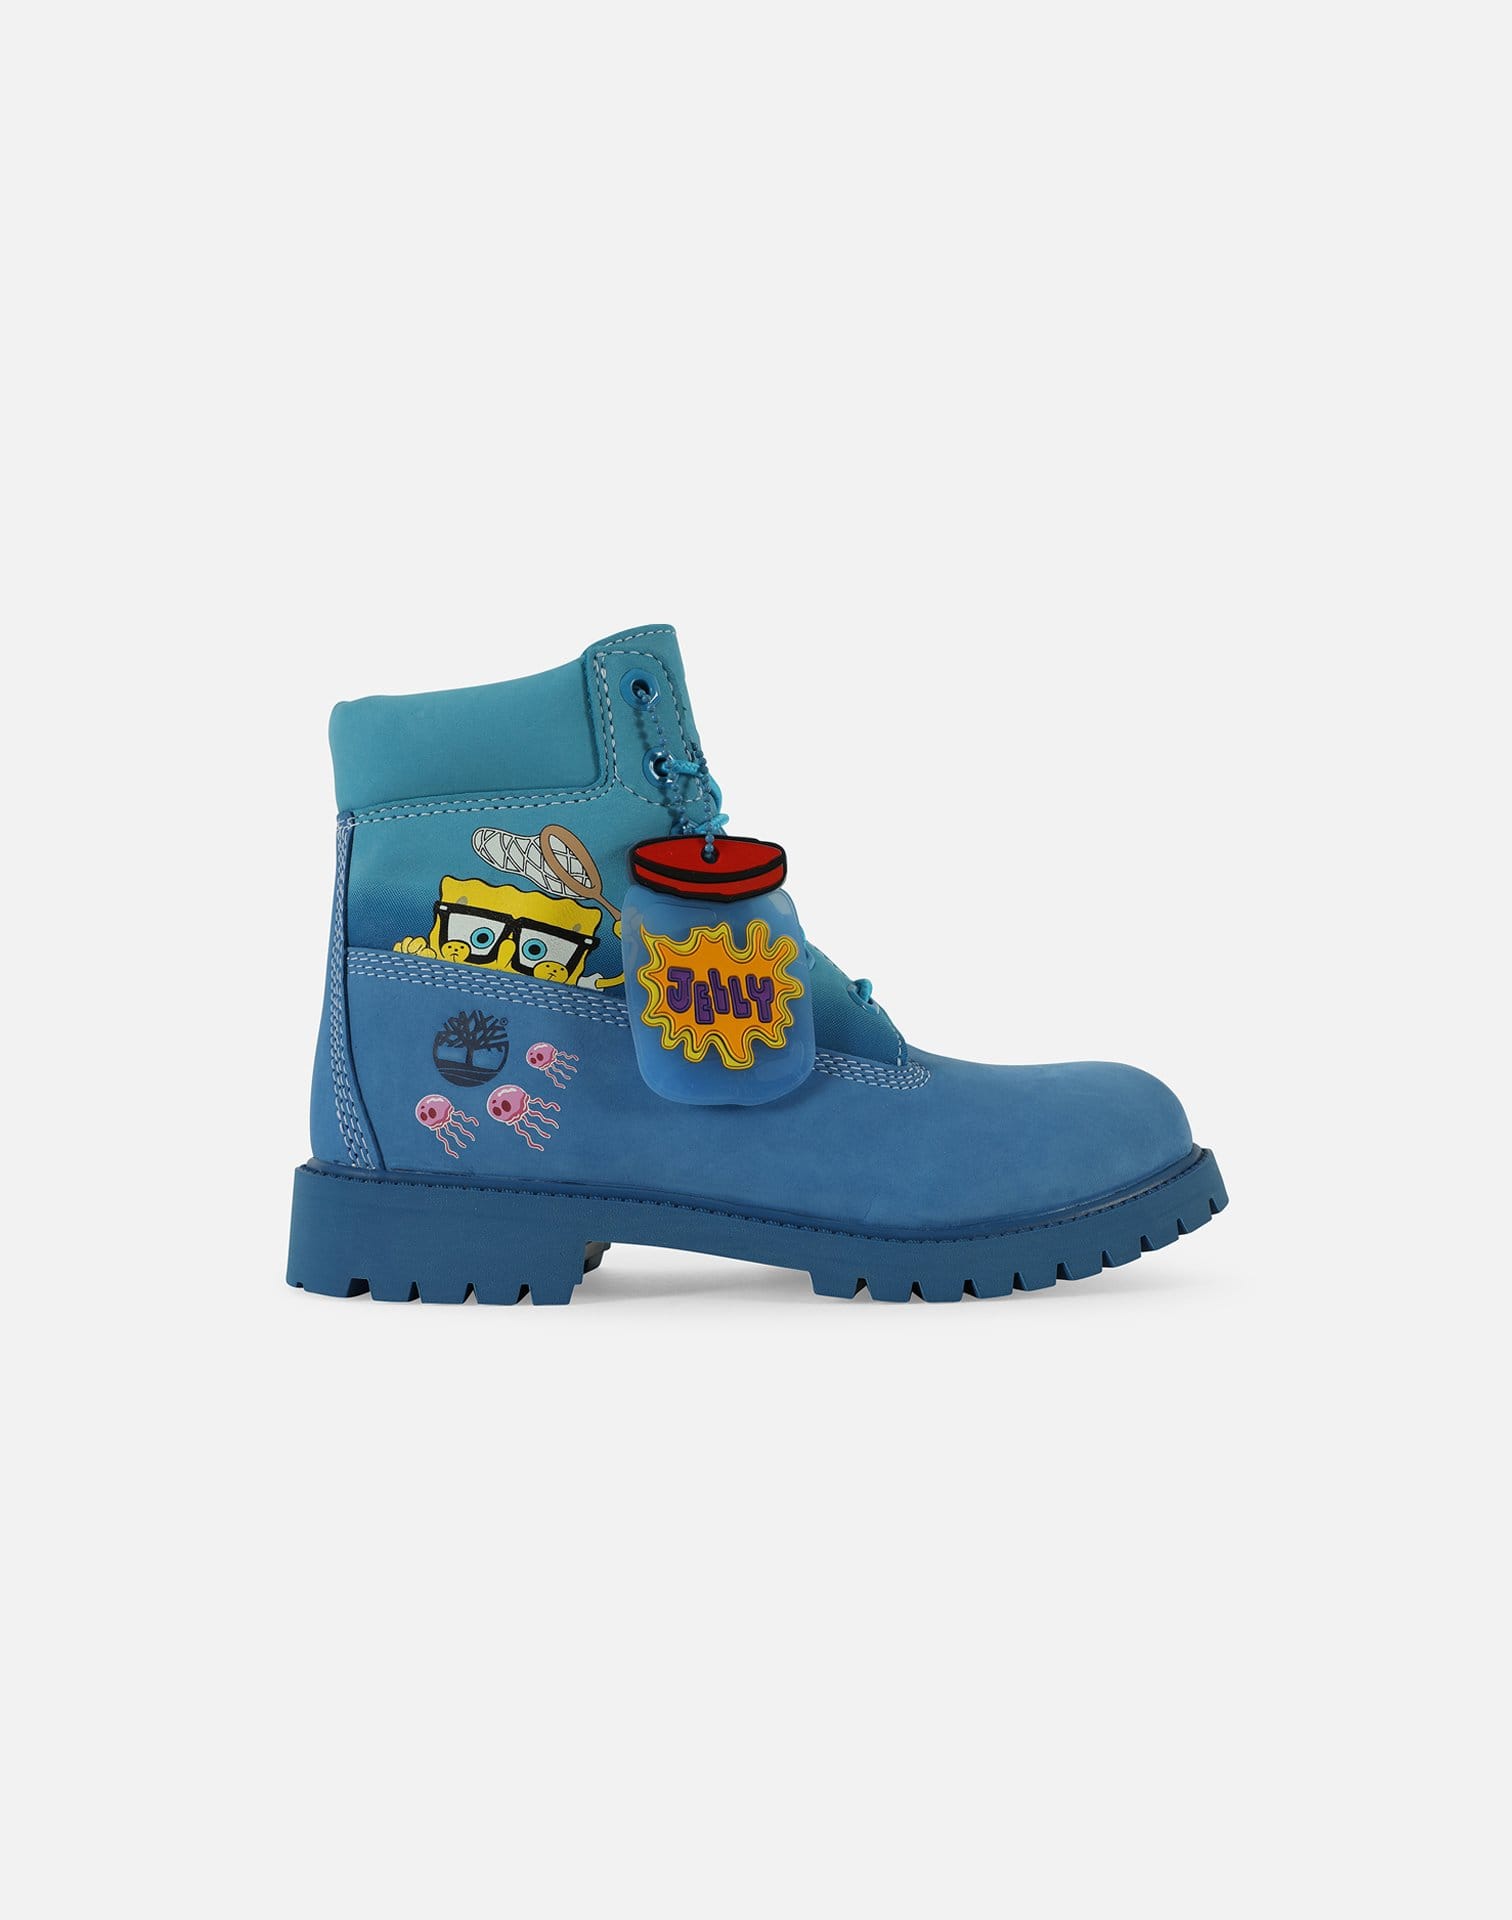 Timberland x Spongebob Squarepants Men's 6" Premium Boots Grade-School